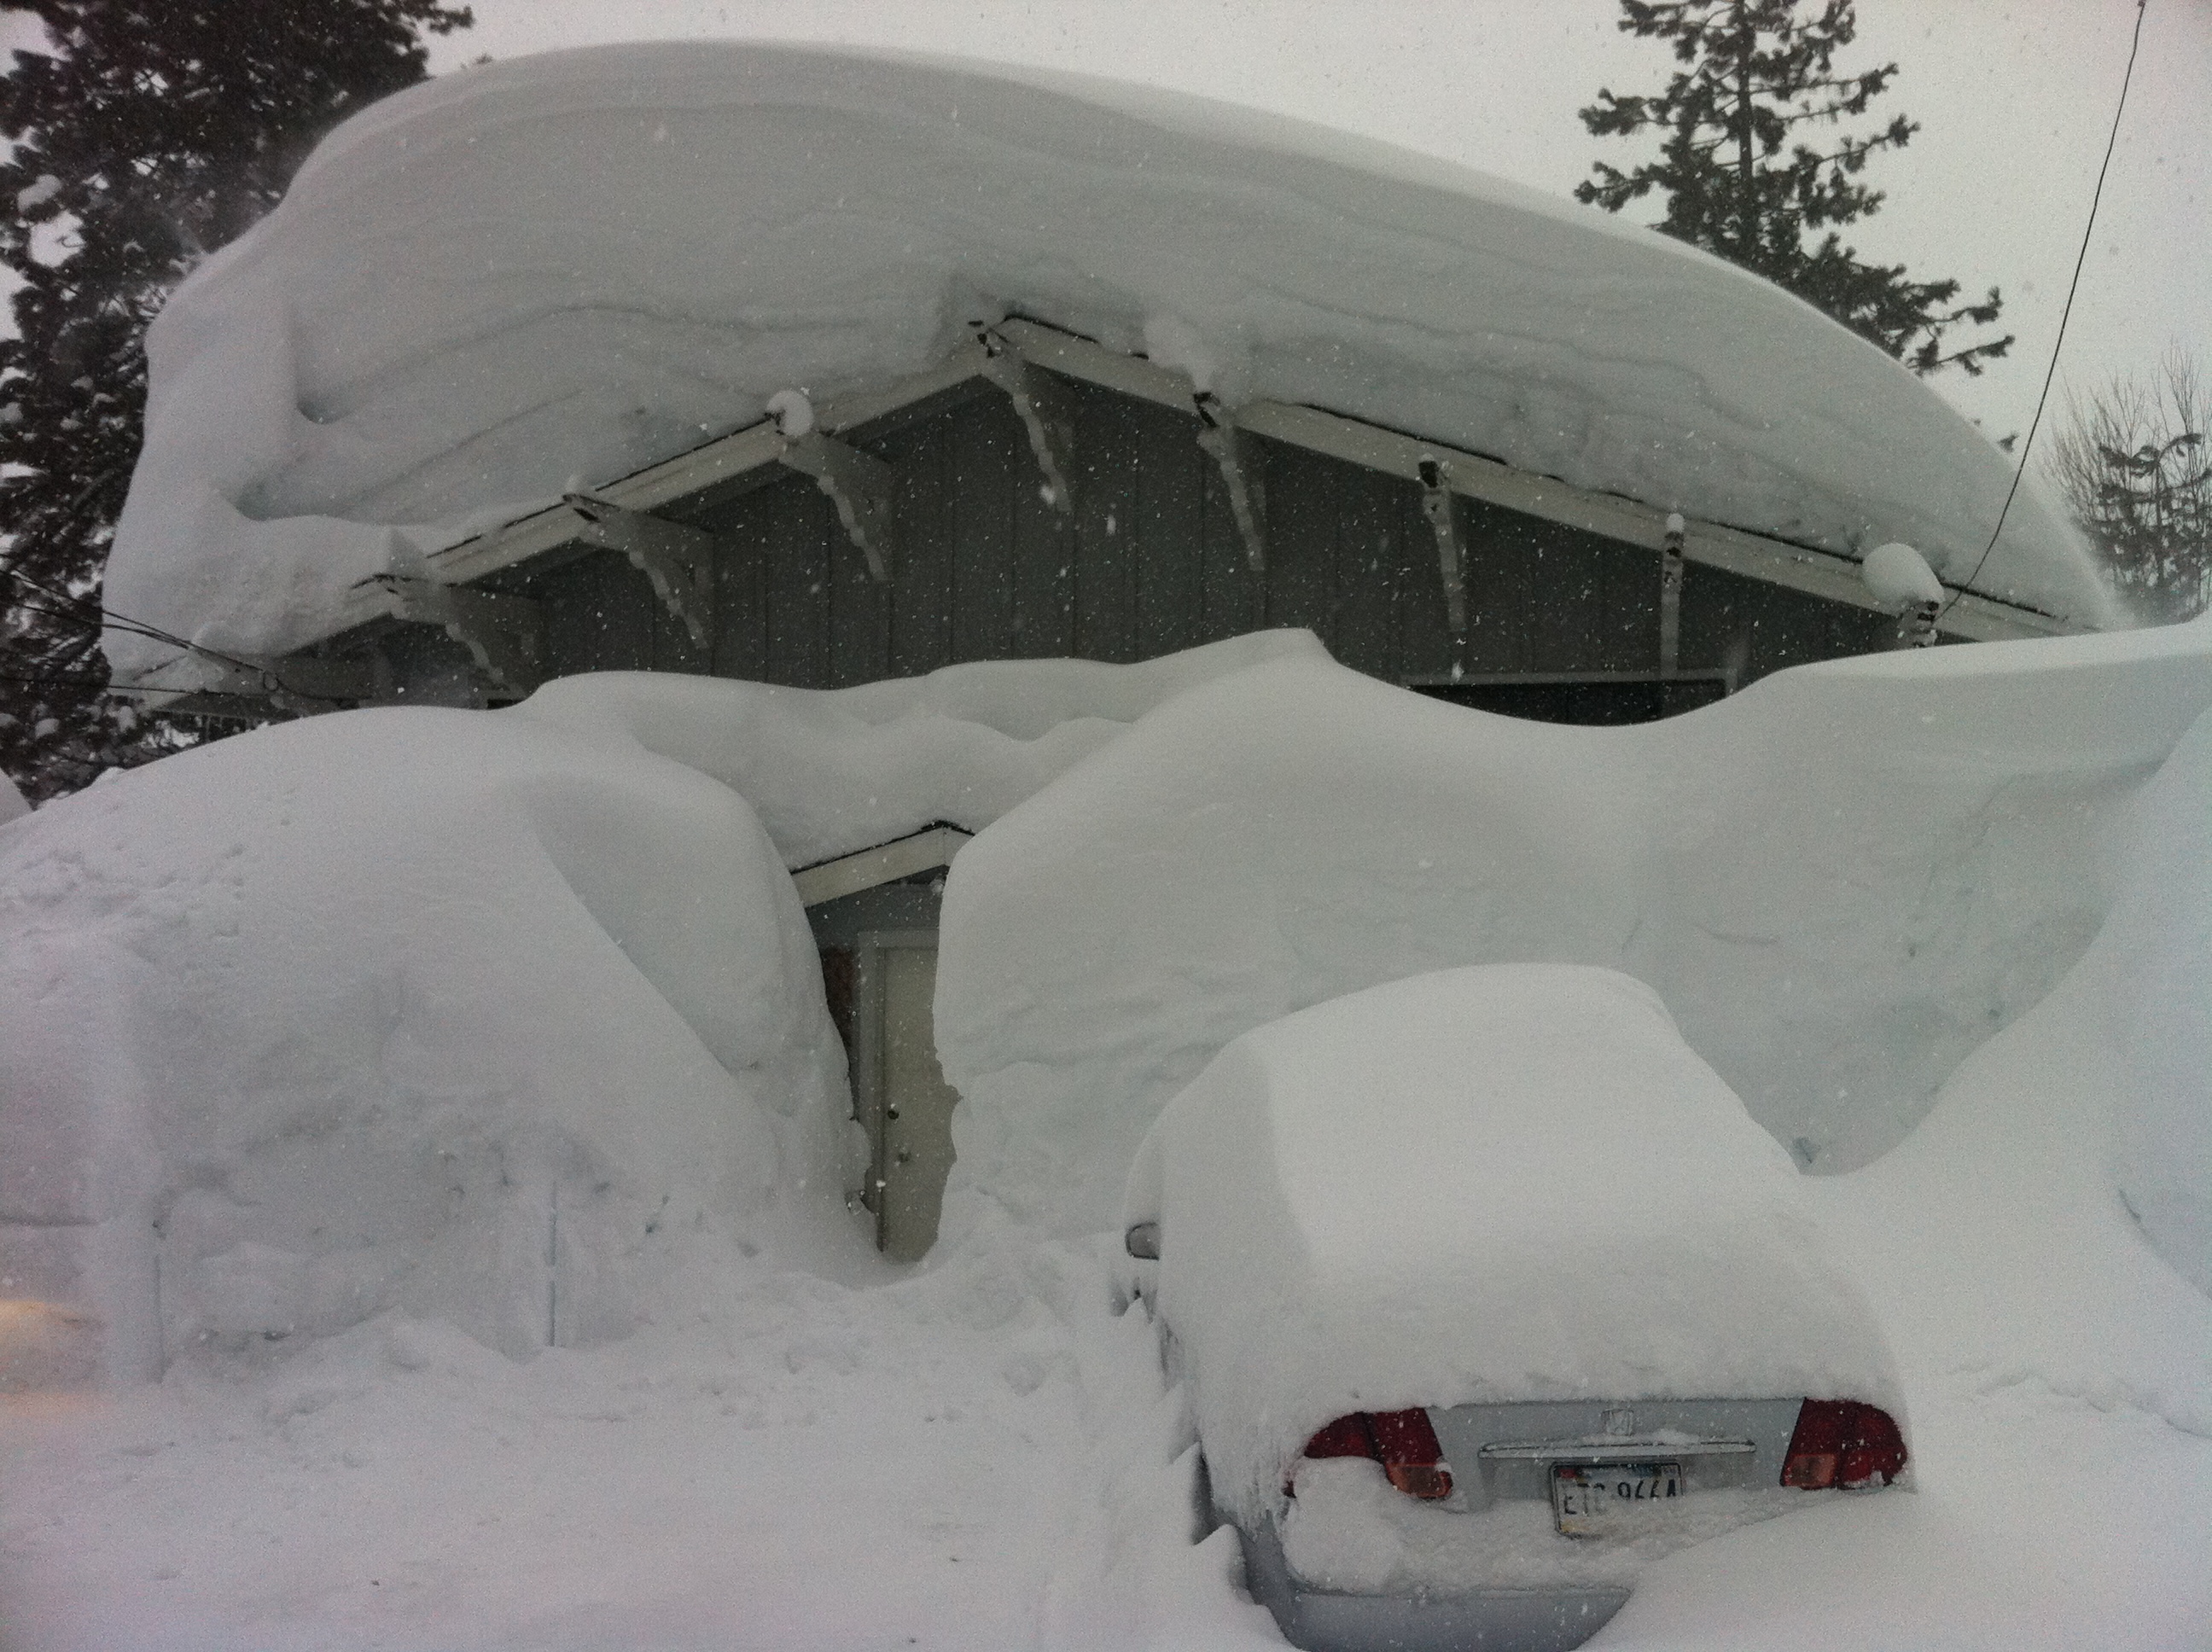 Up to 852" of snow fell in the winter of 2010/11 in Lake Tahoe, El Niño